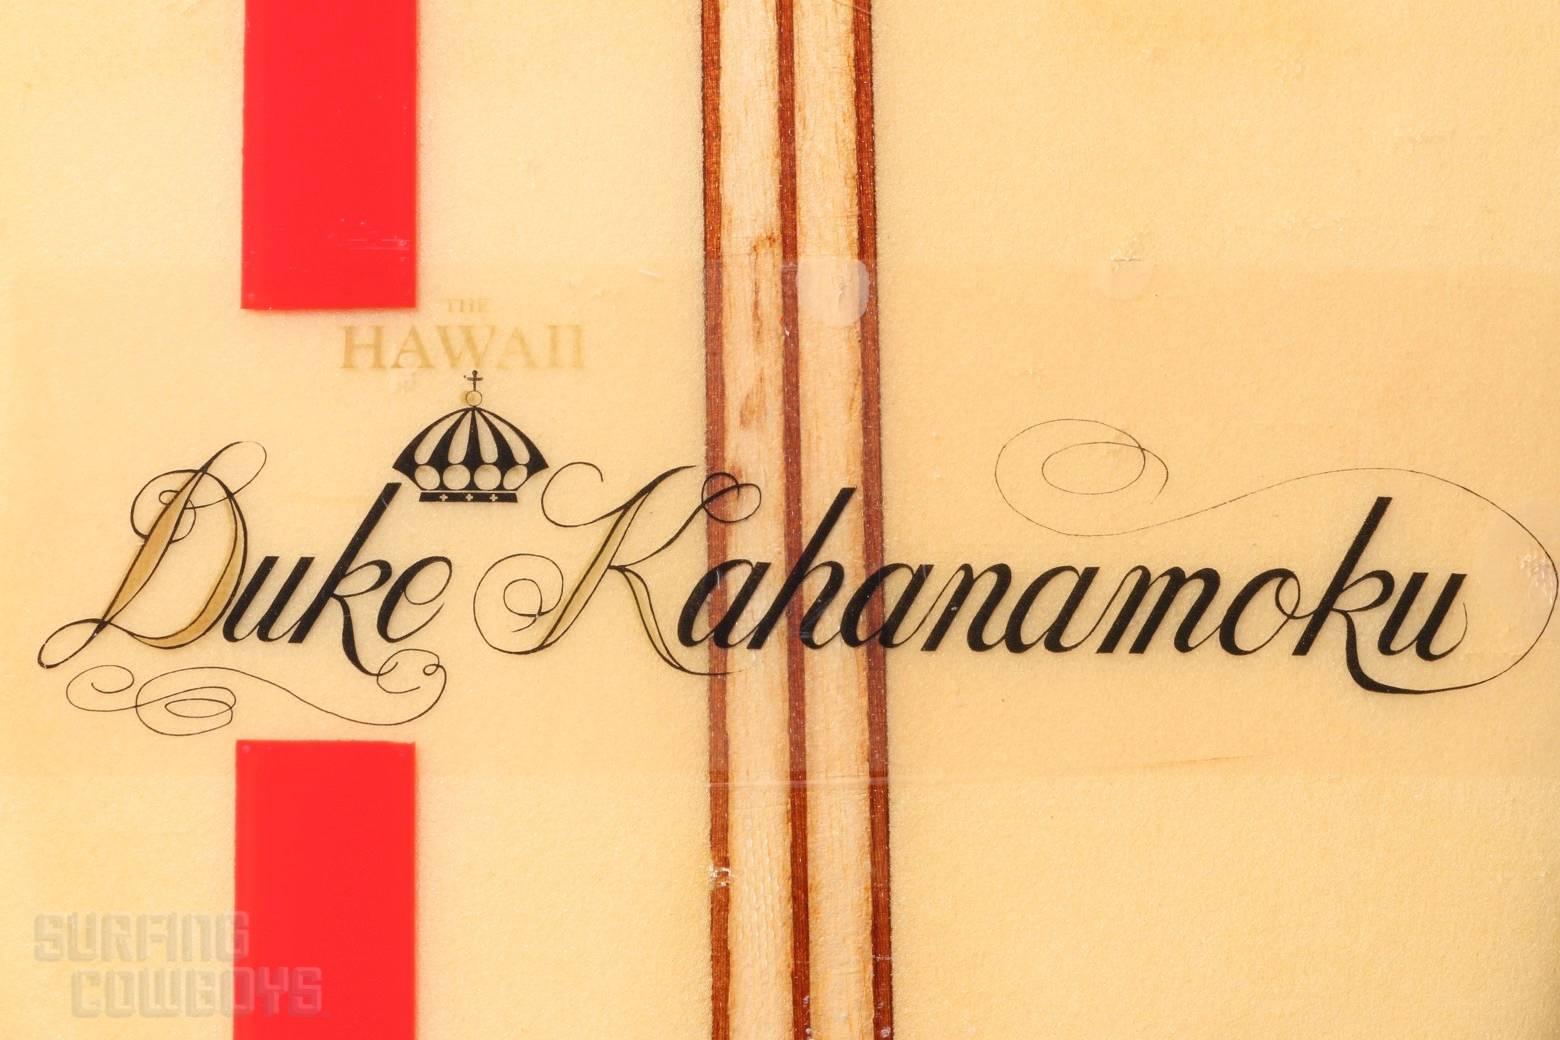 Fiberglass Original Duke Kahanamoku Longboard Surfboard with Red Stripes circa 1965  